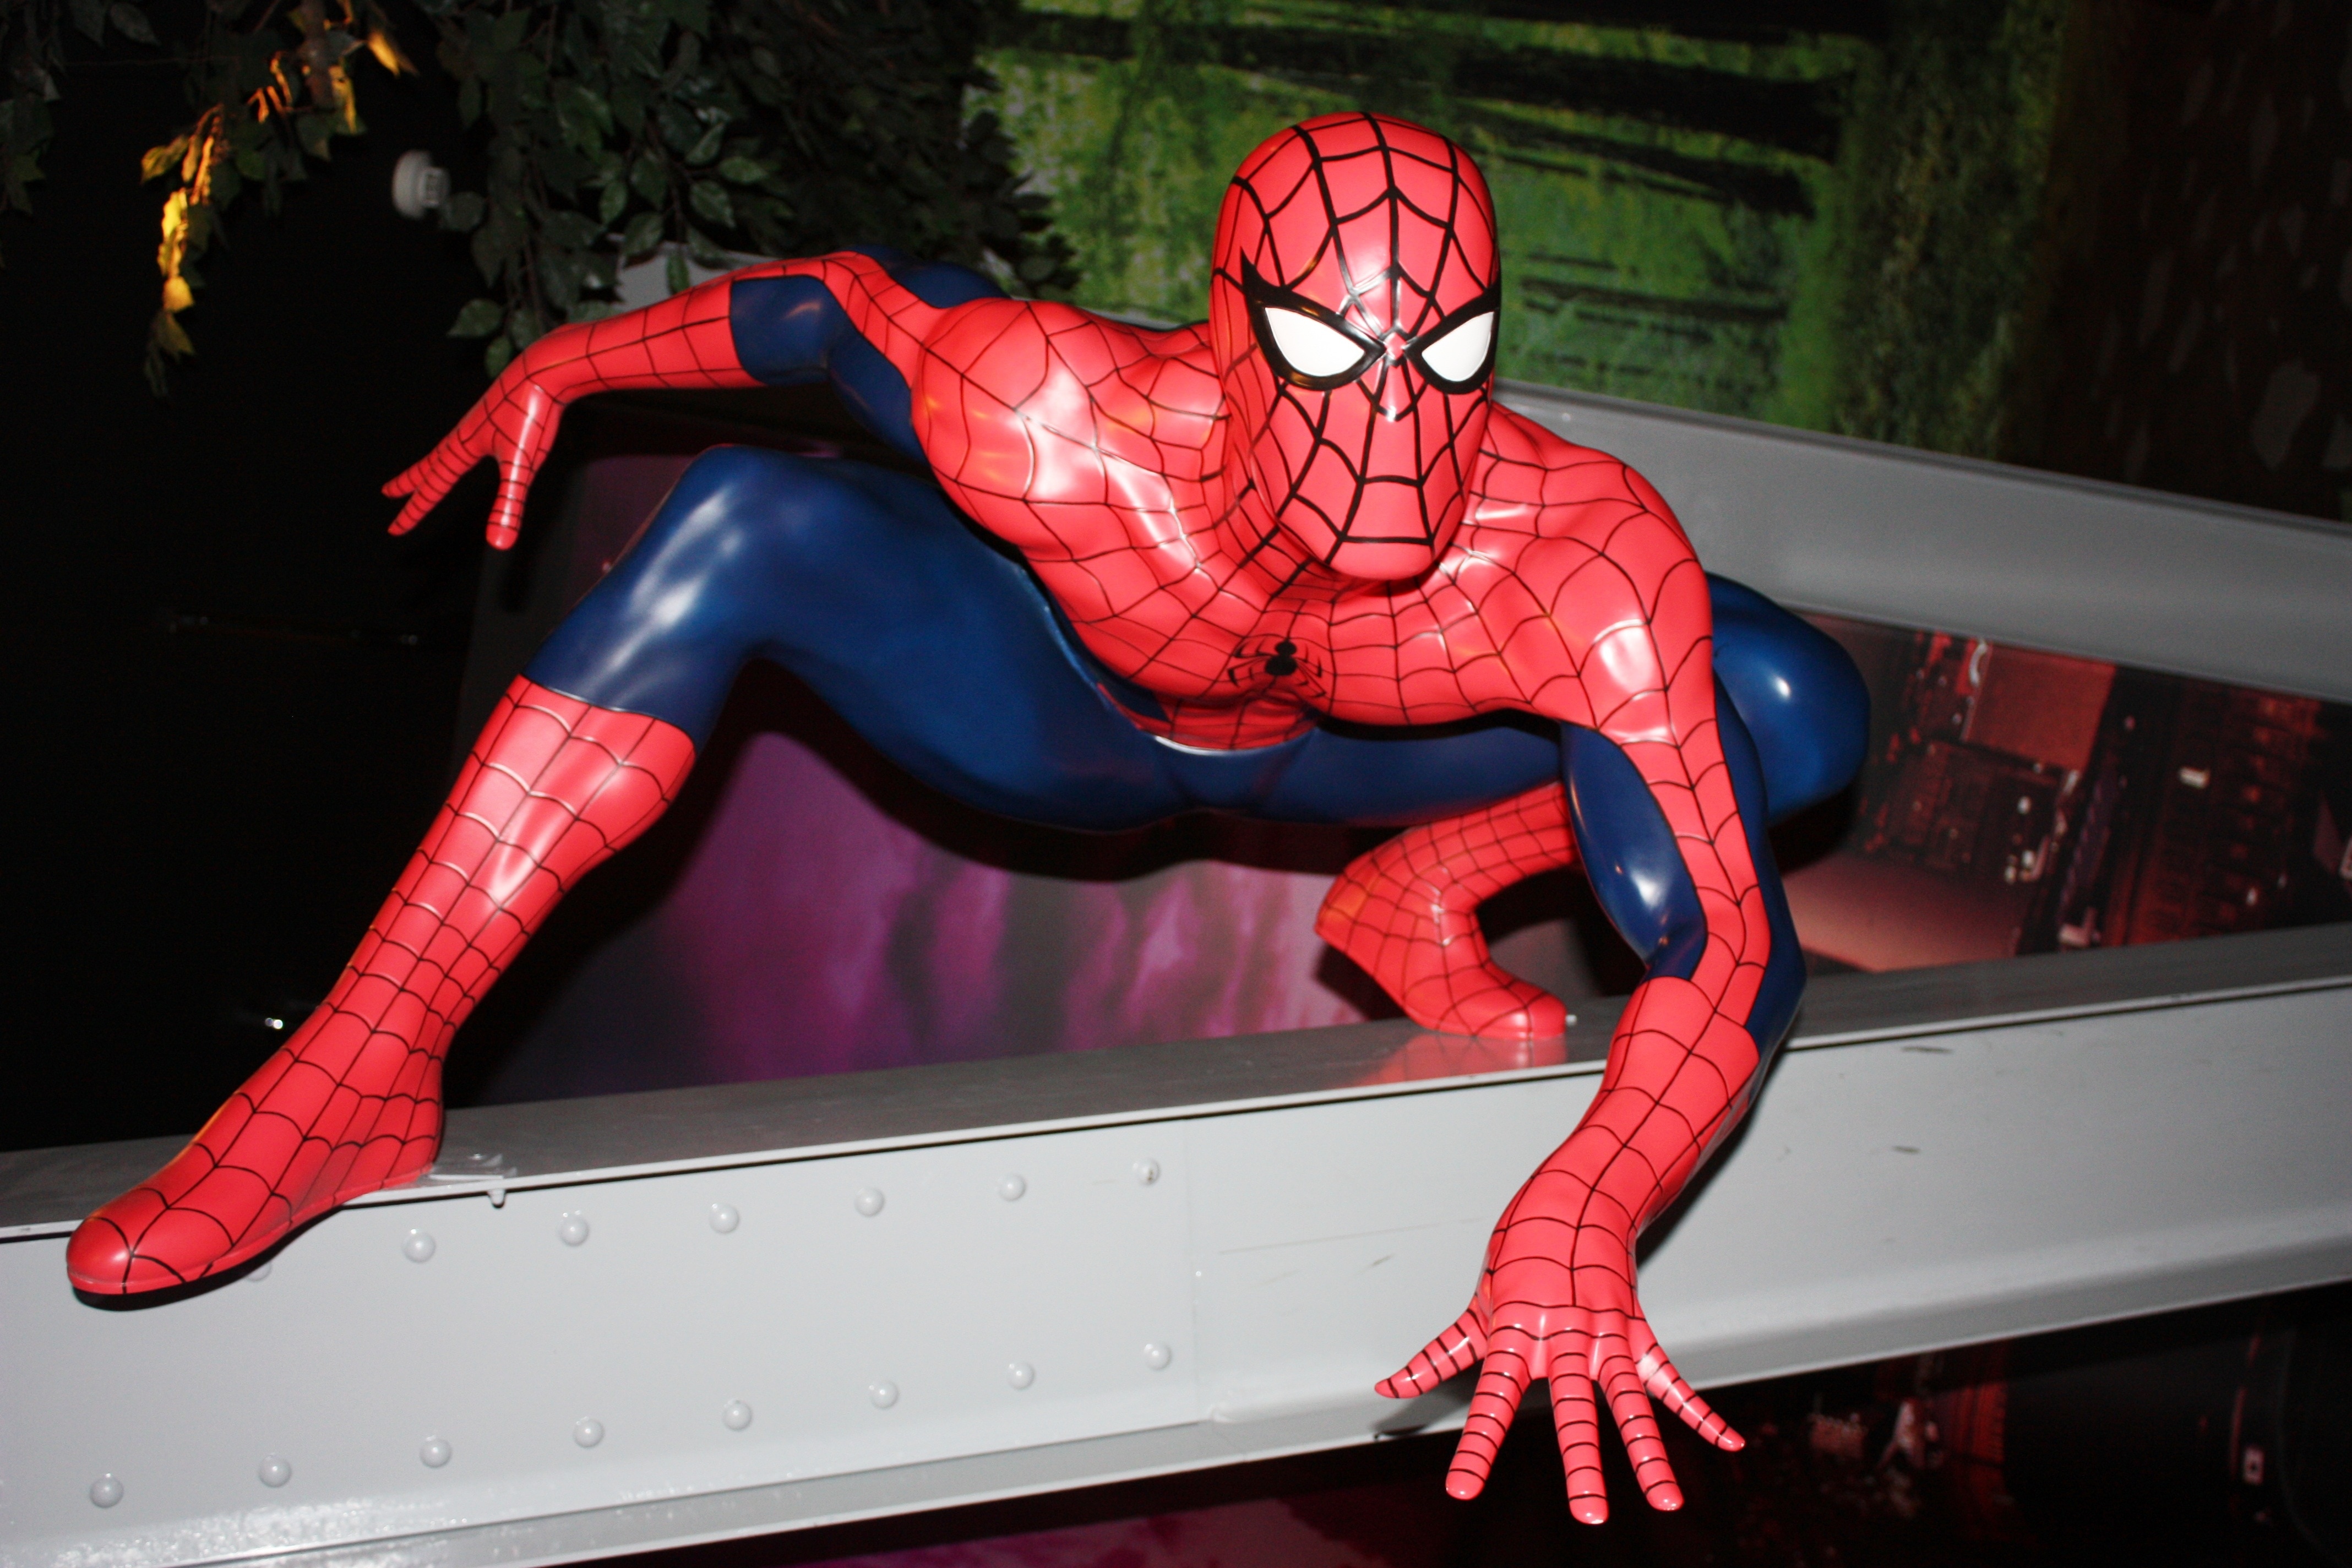 spider-man plastic toy